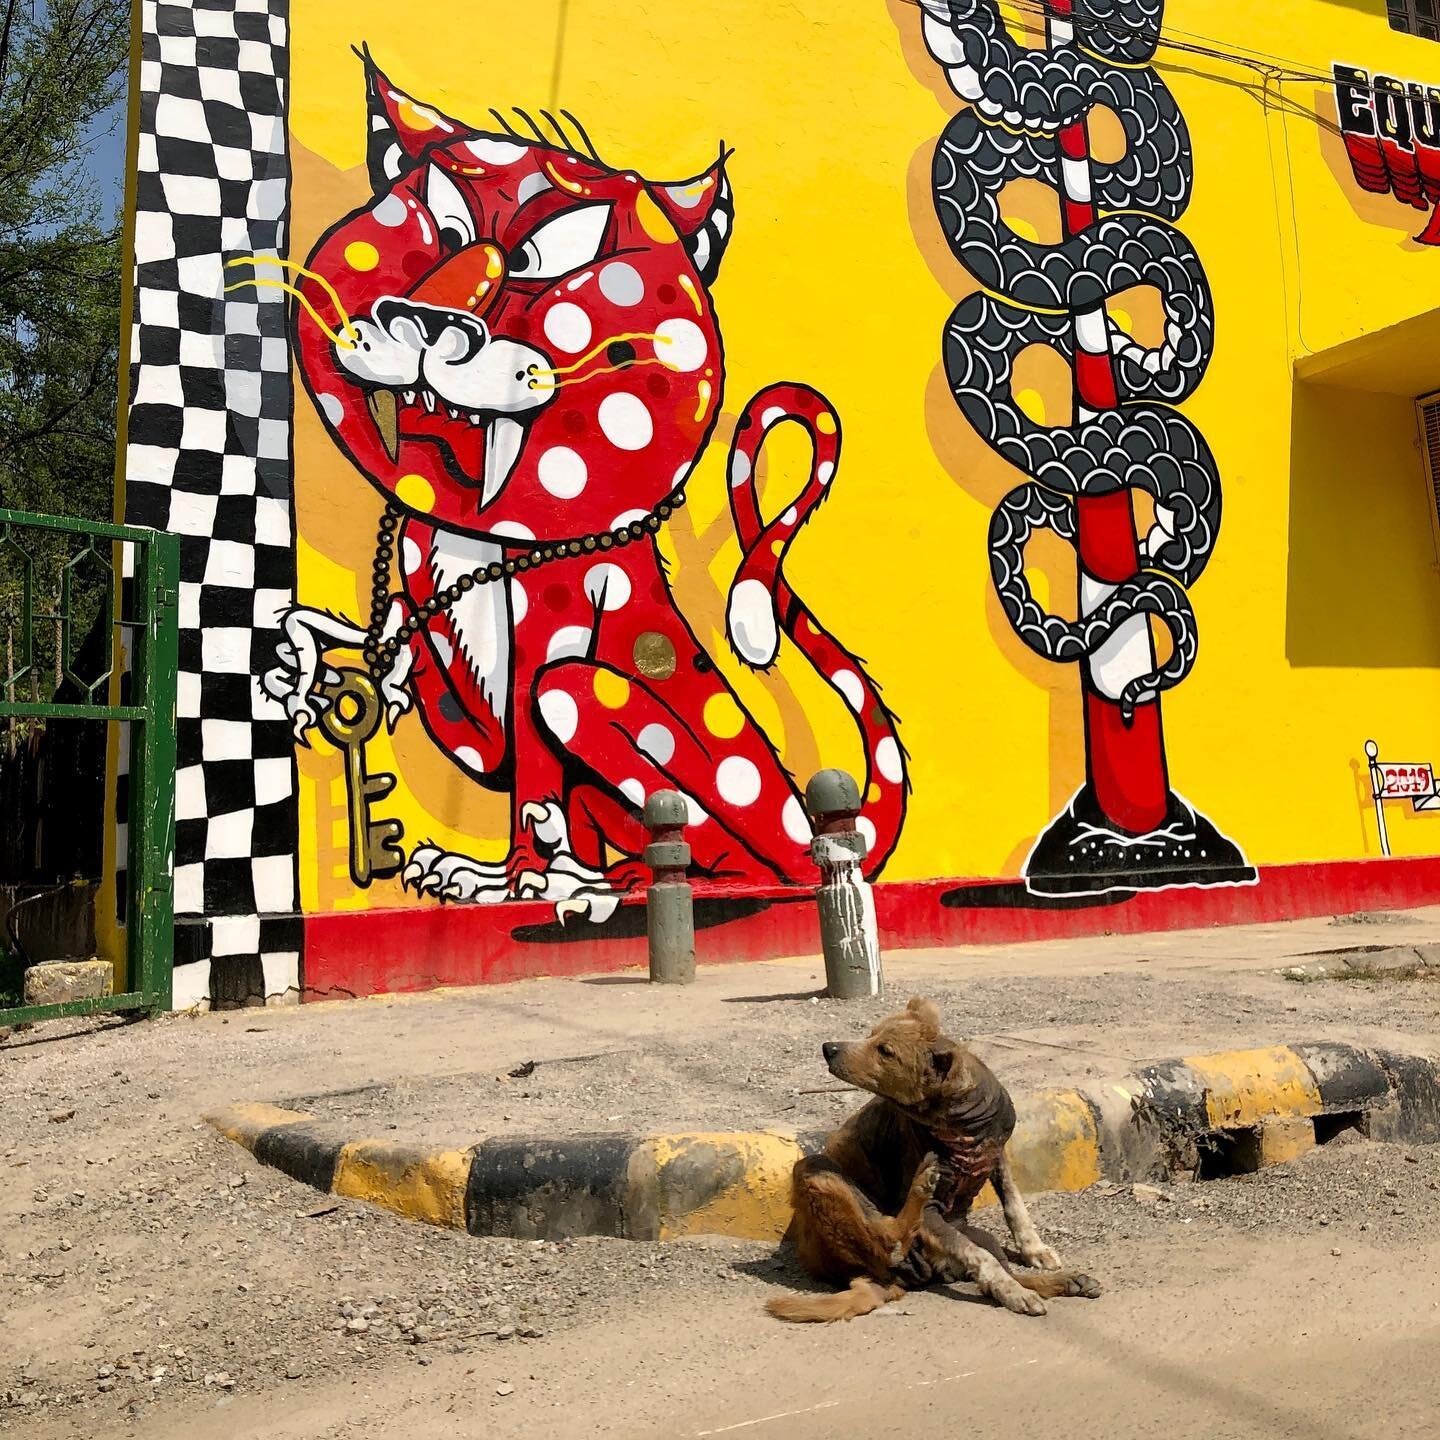 Delhi flashbacks &ldquo;Letters to Lodhi&rdquo; 
@_sheryo @_theyok @startindia

Lodhi, New Delhi, India
Spring of 2019
.
#streetphotography #streetart #graffiti #muralart #citylife #dogsofinstagram #dogoftheday #streetarteverywhere #travelphotography